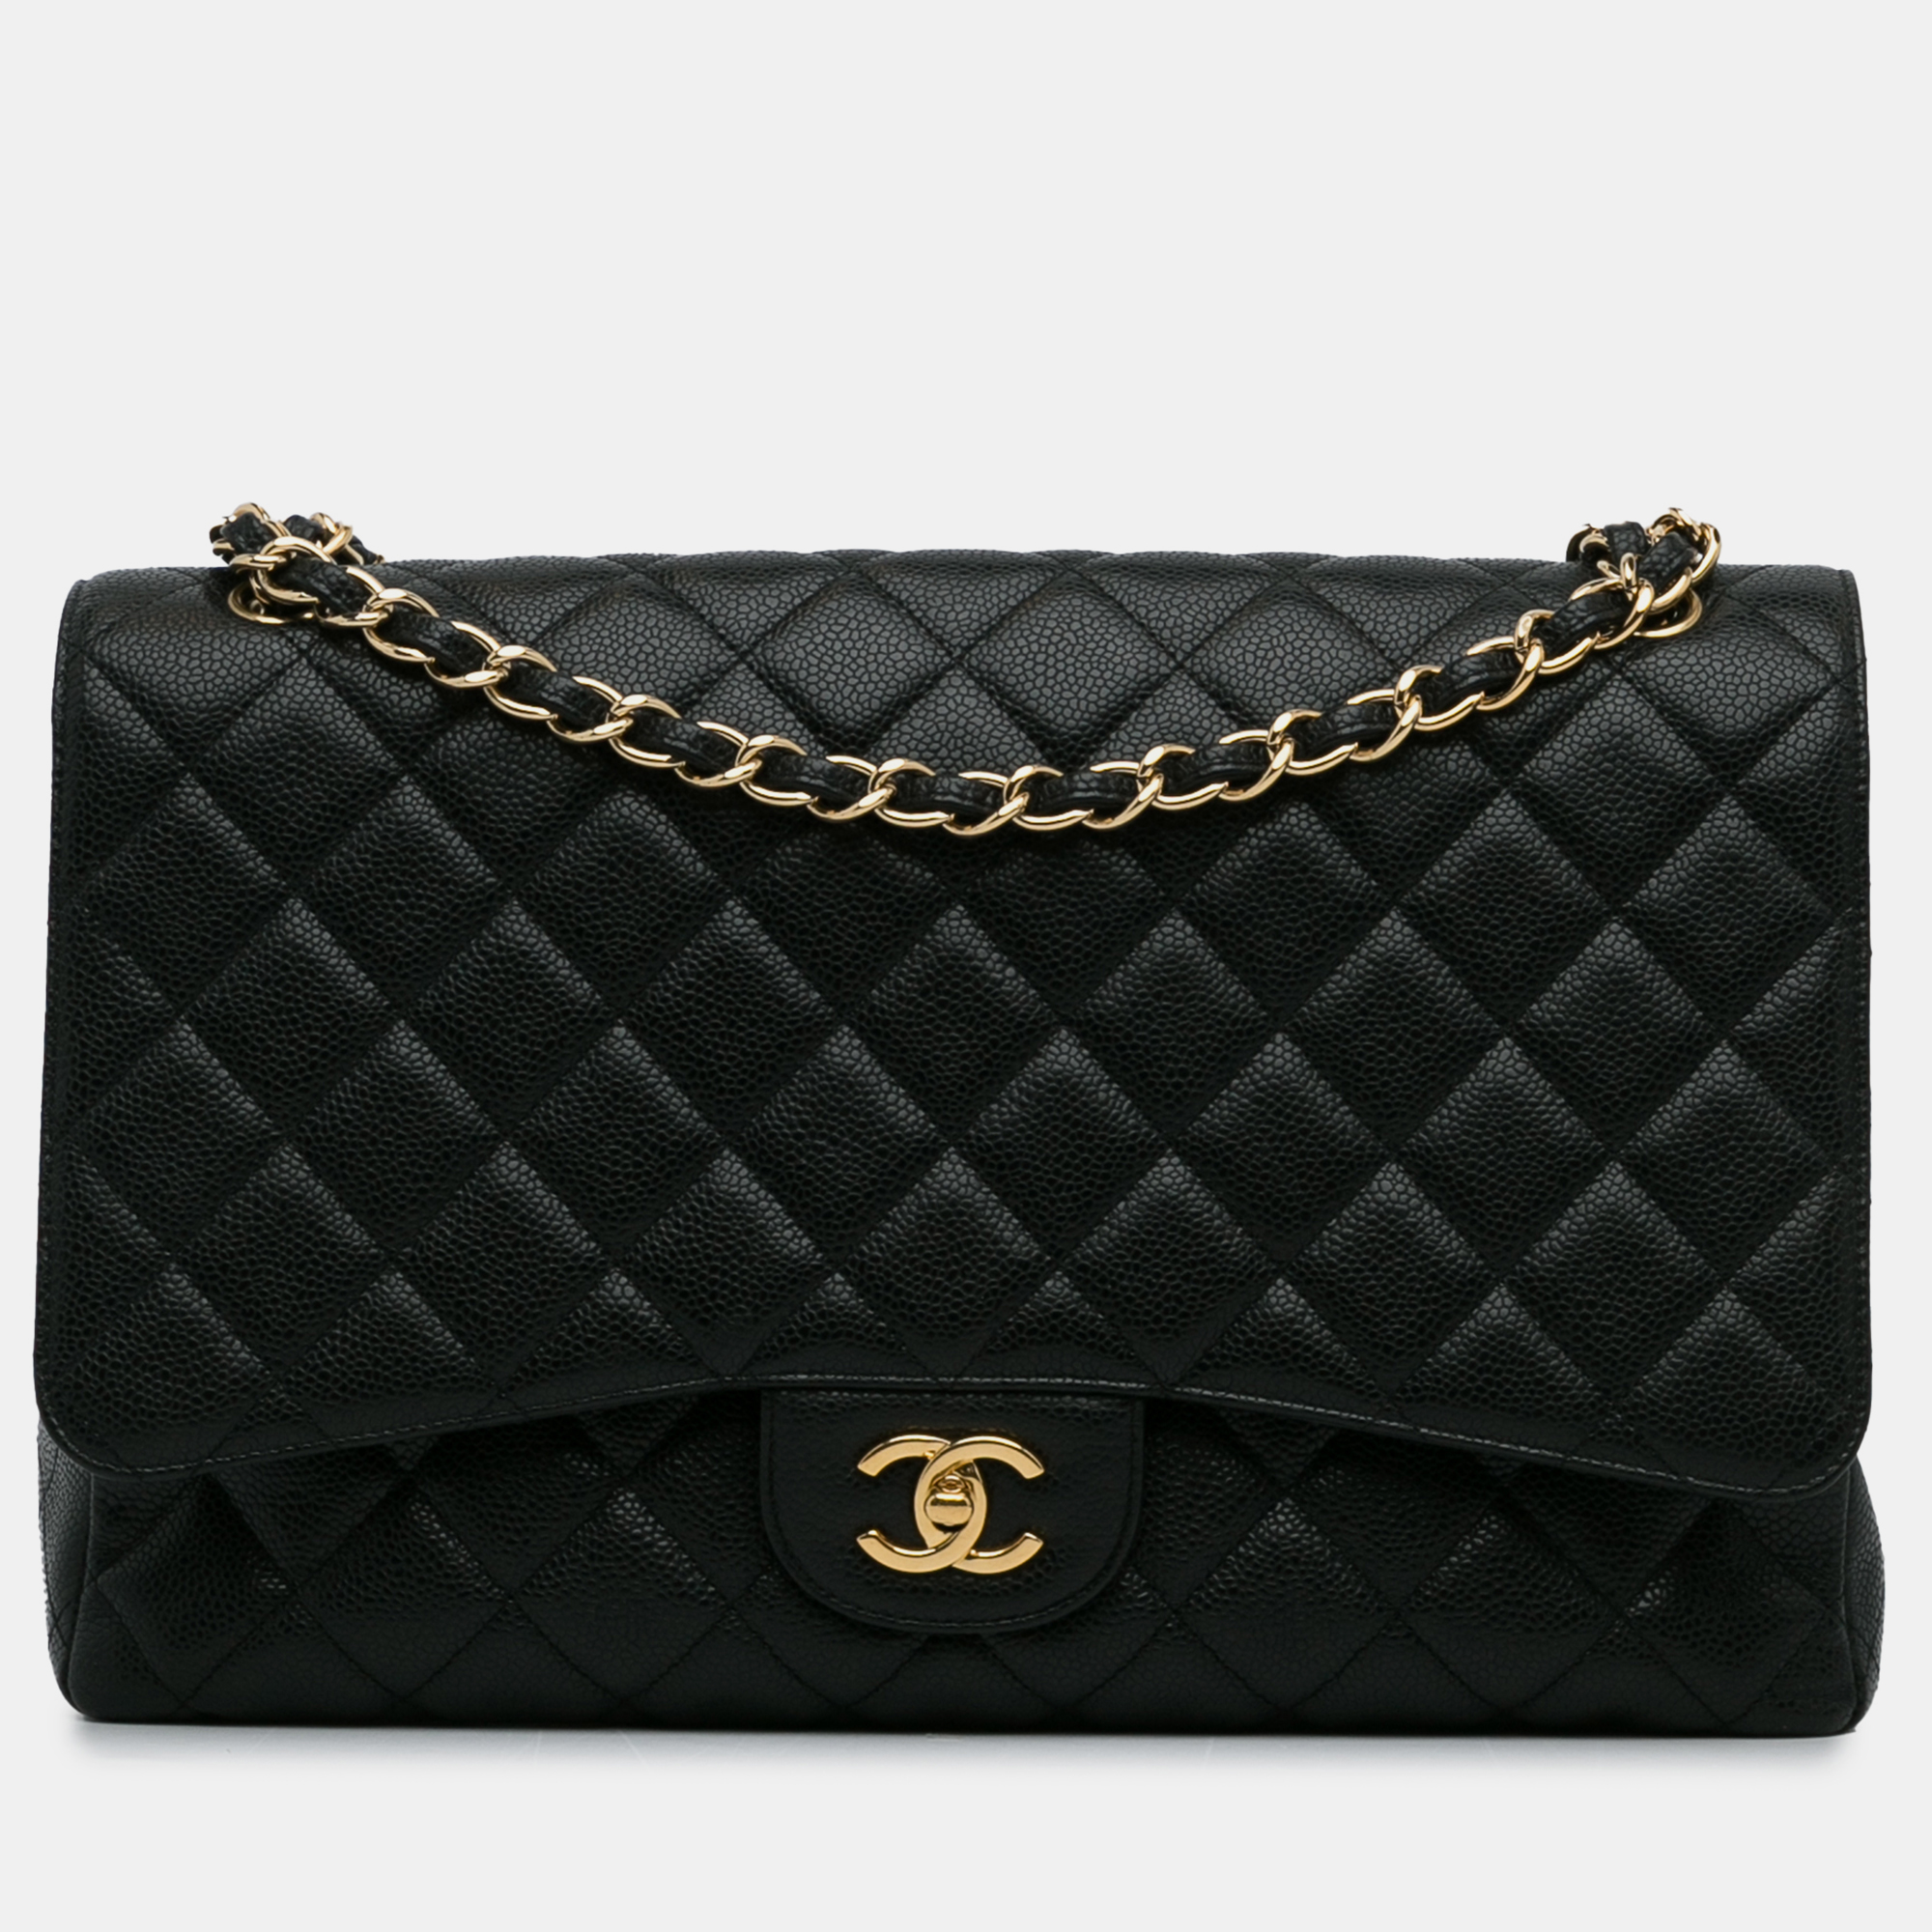 Chanel maxi classic caviar single flap bag